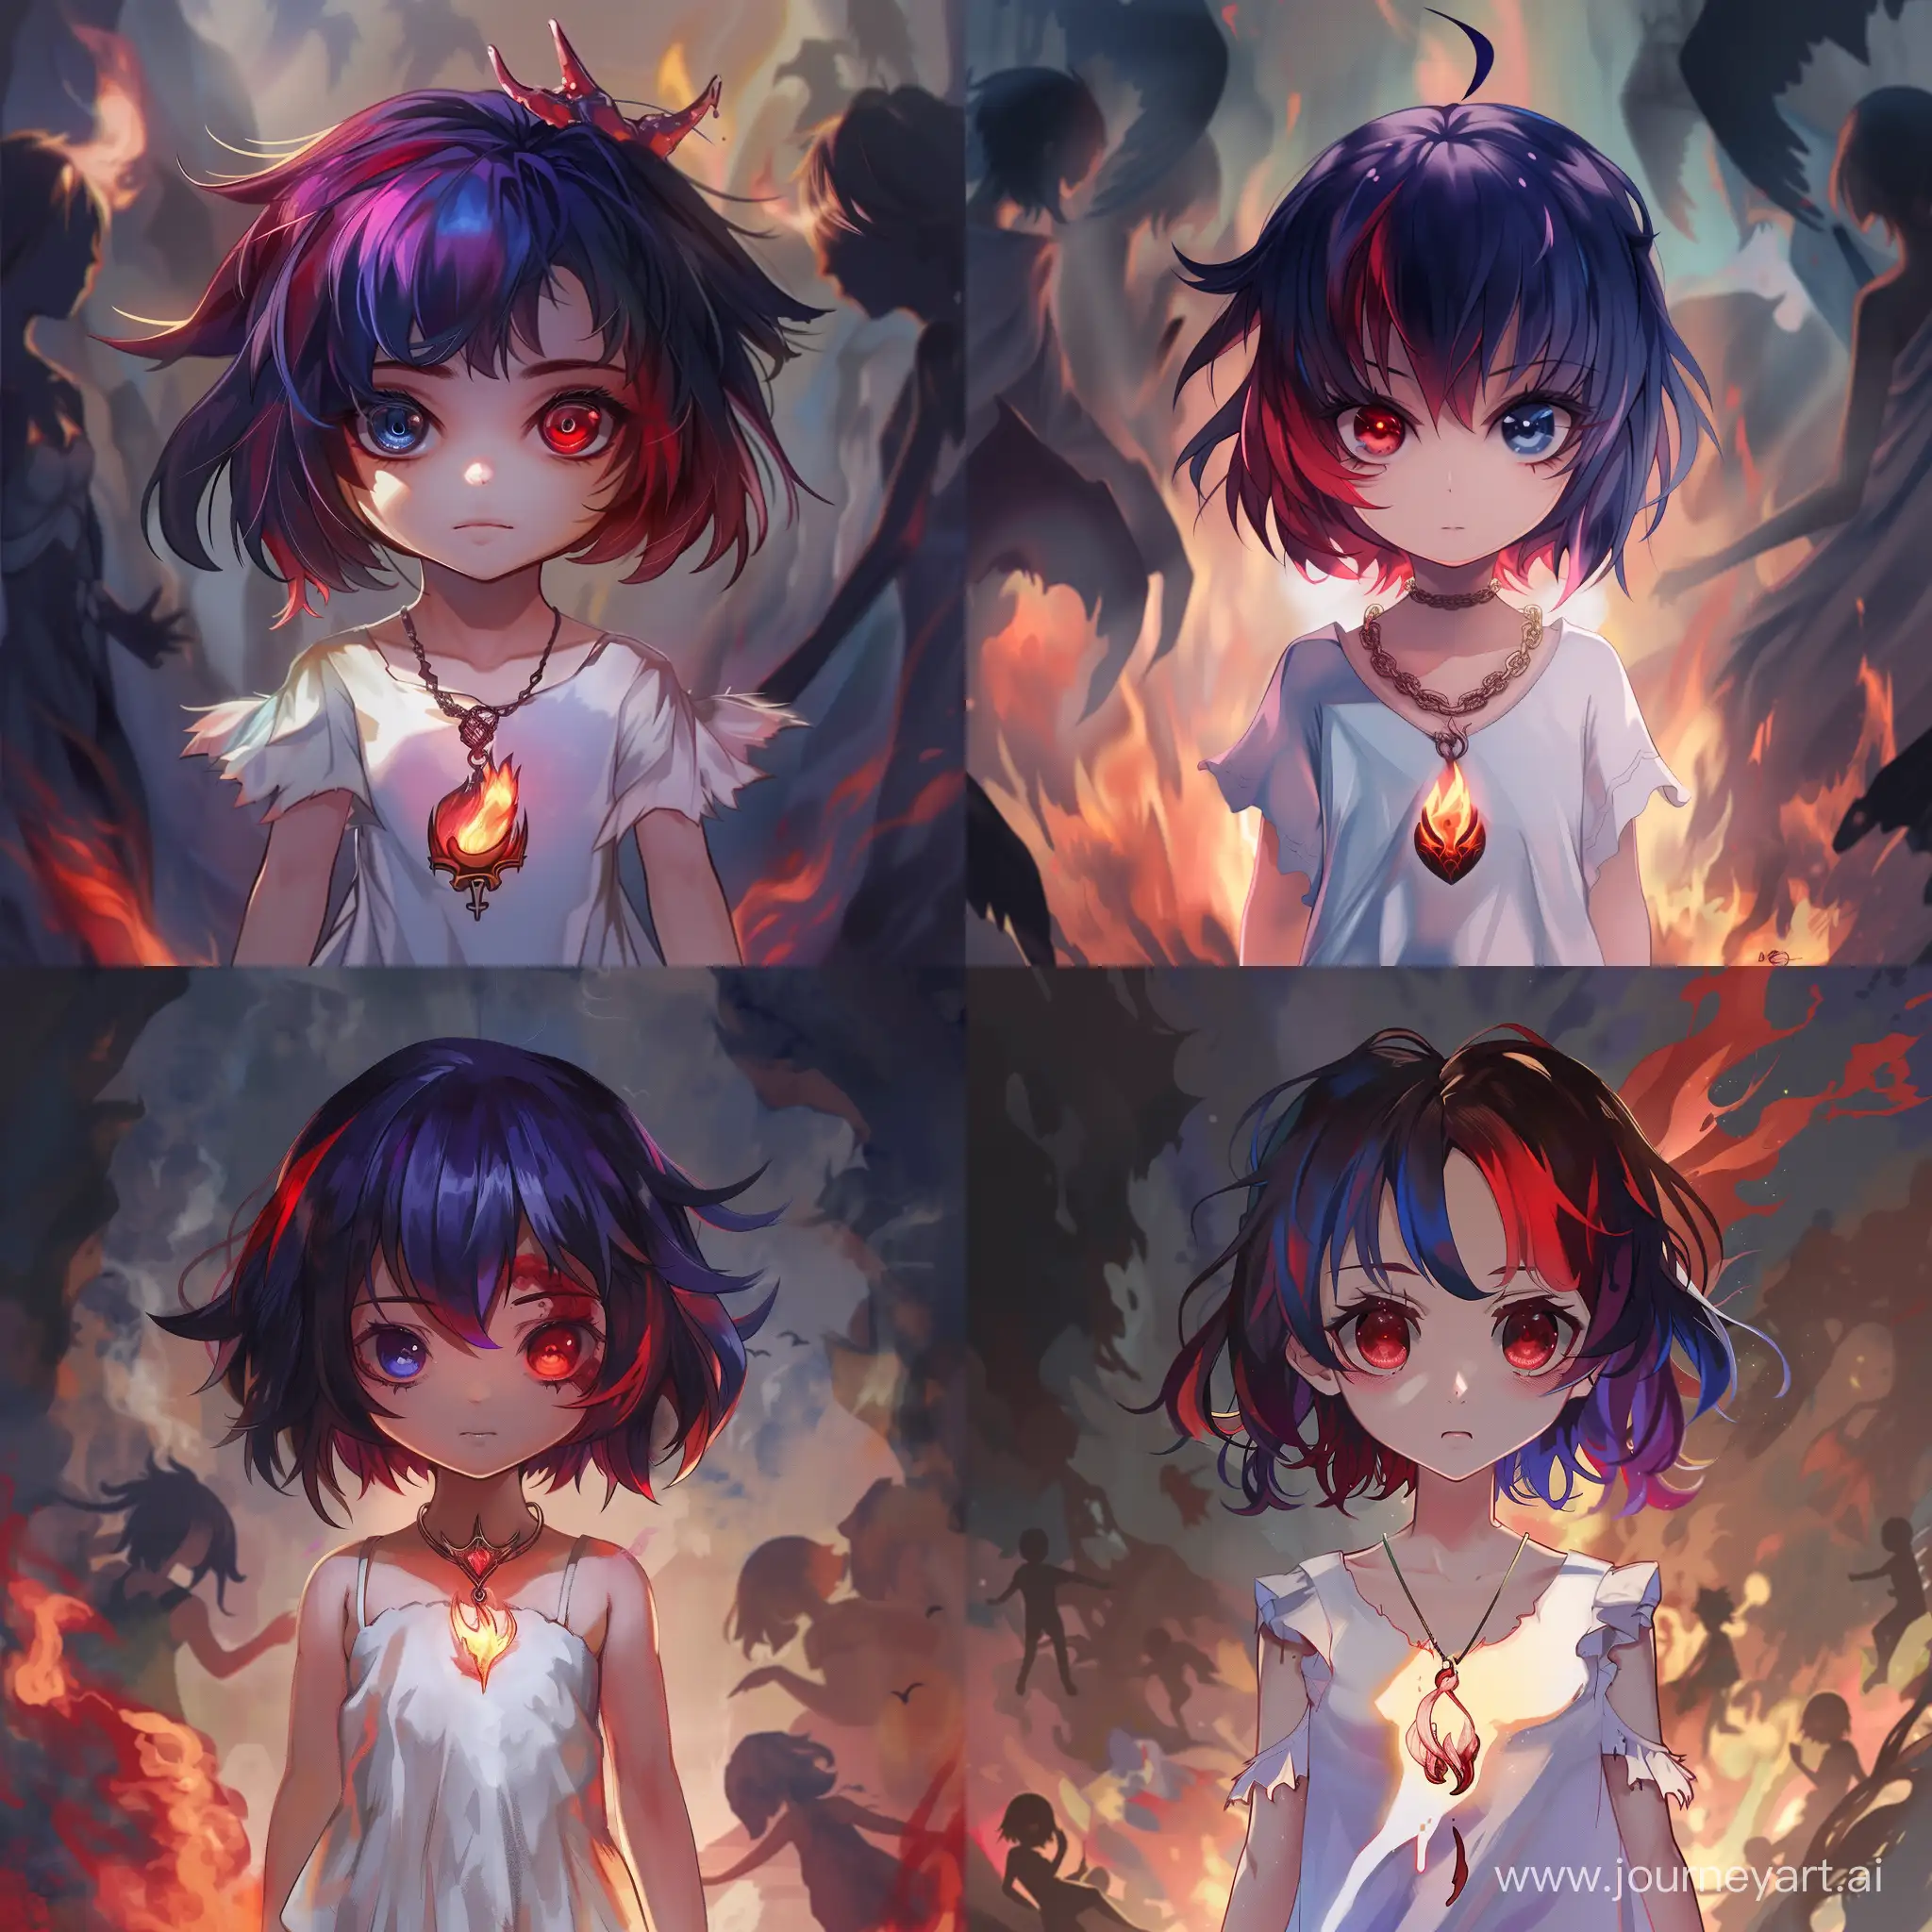 Innocence-Veiling-Malevolence-The-Demonic-Girl-in-Ethereal-Flames